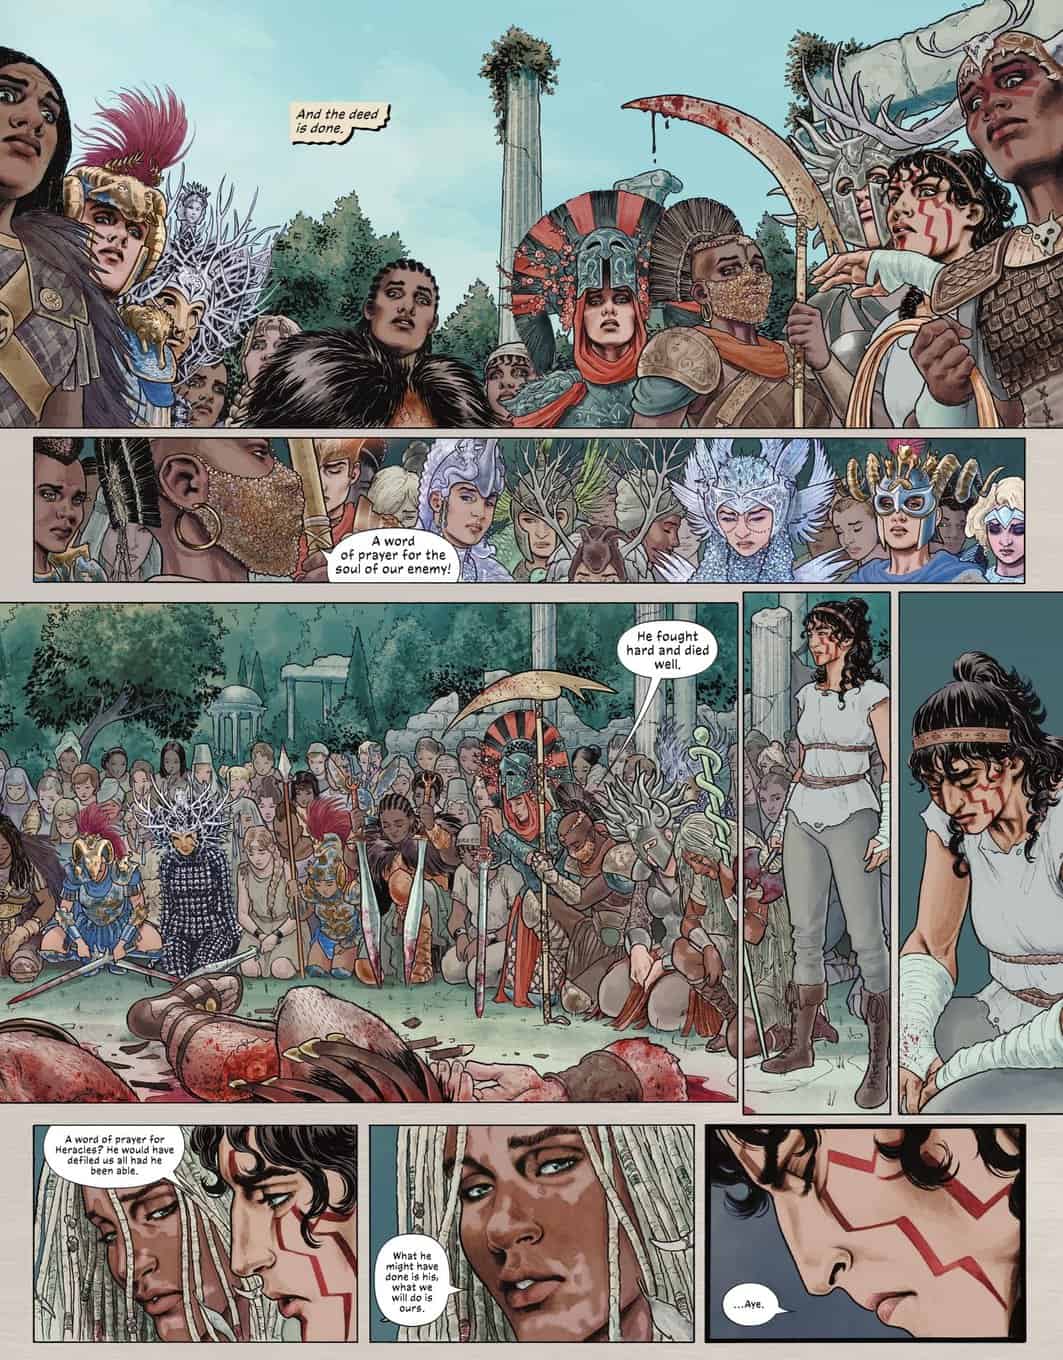 Wonder Woman Historia #3 spoilers 7 Heracles